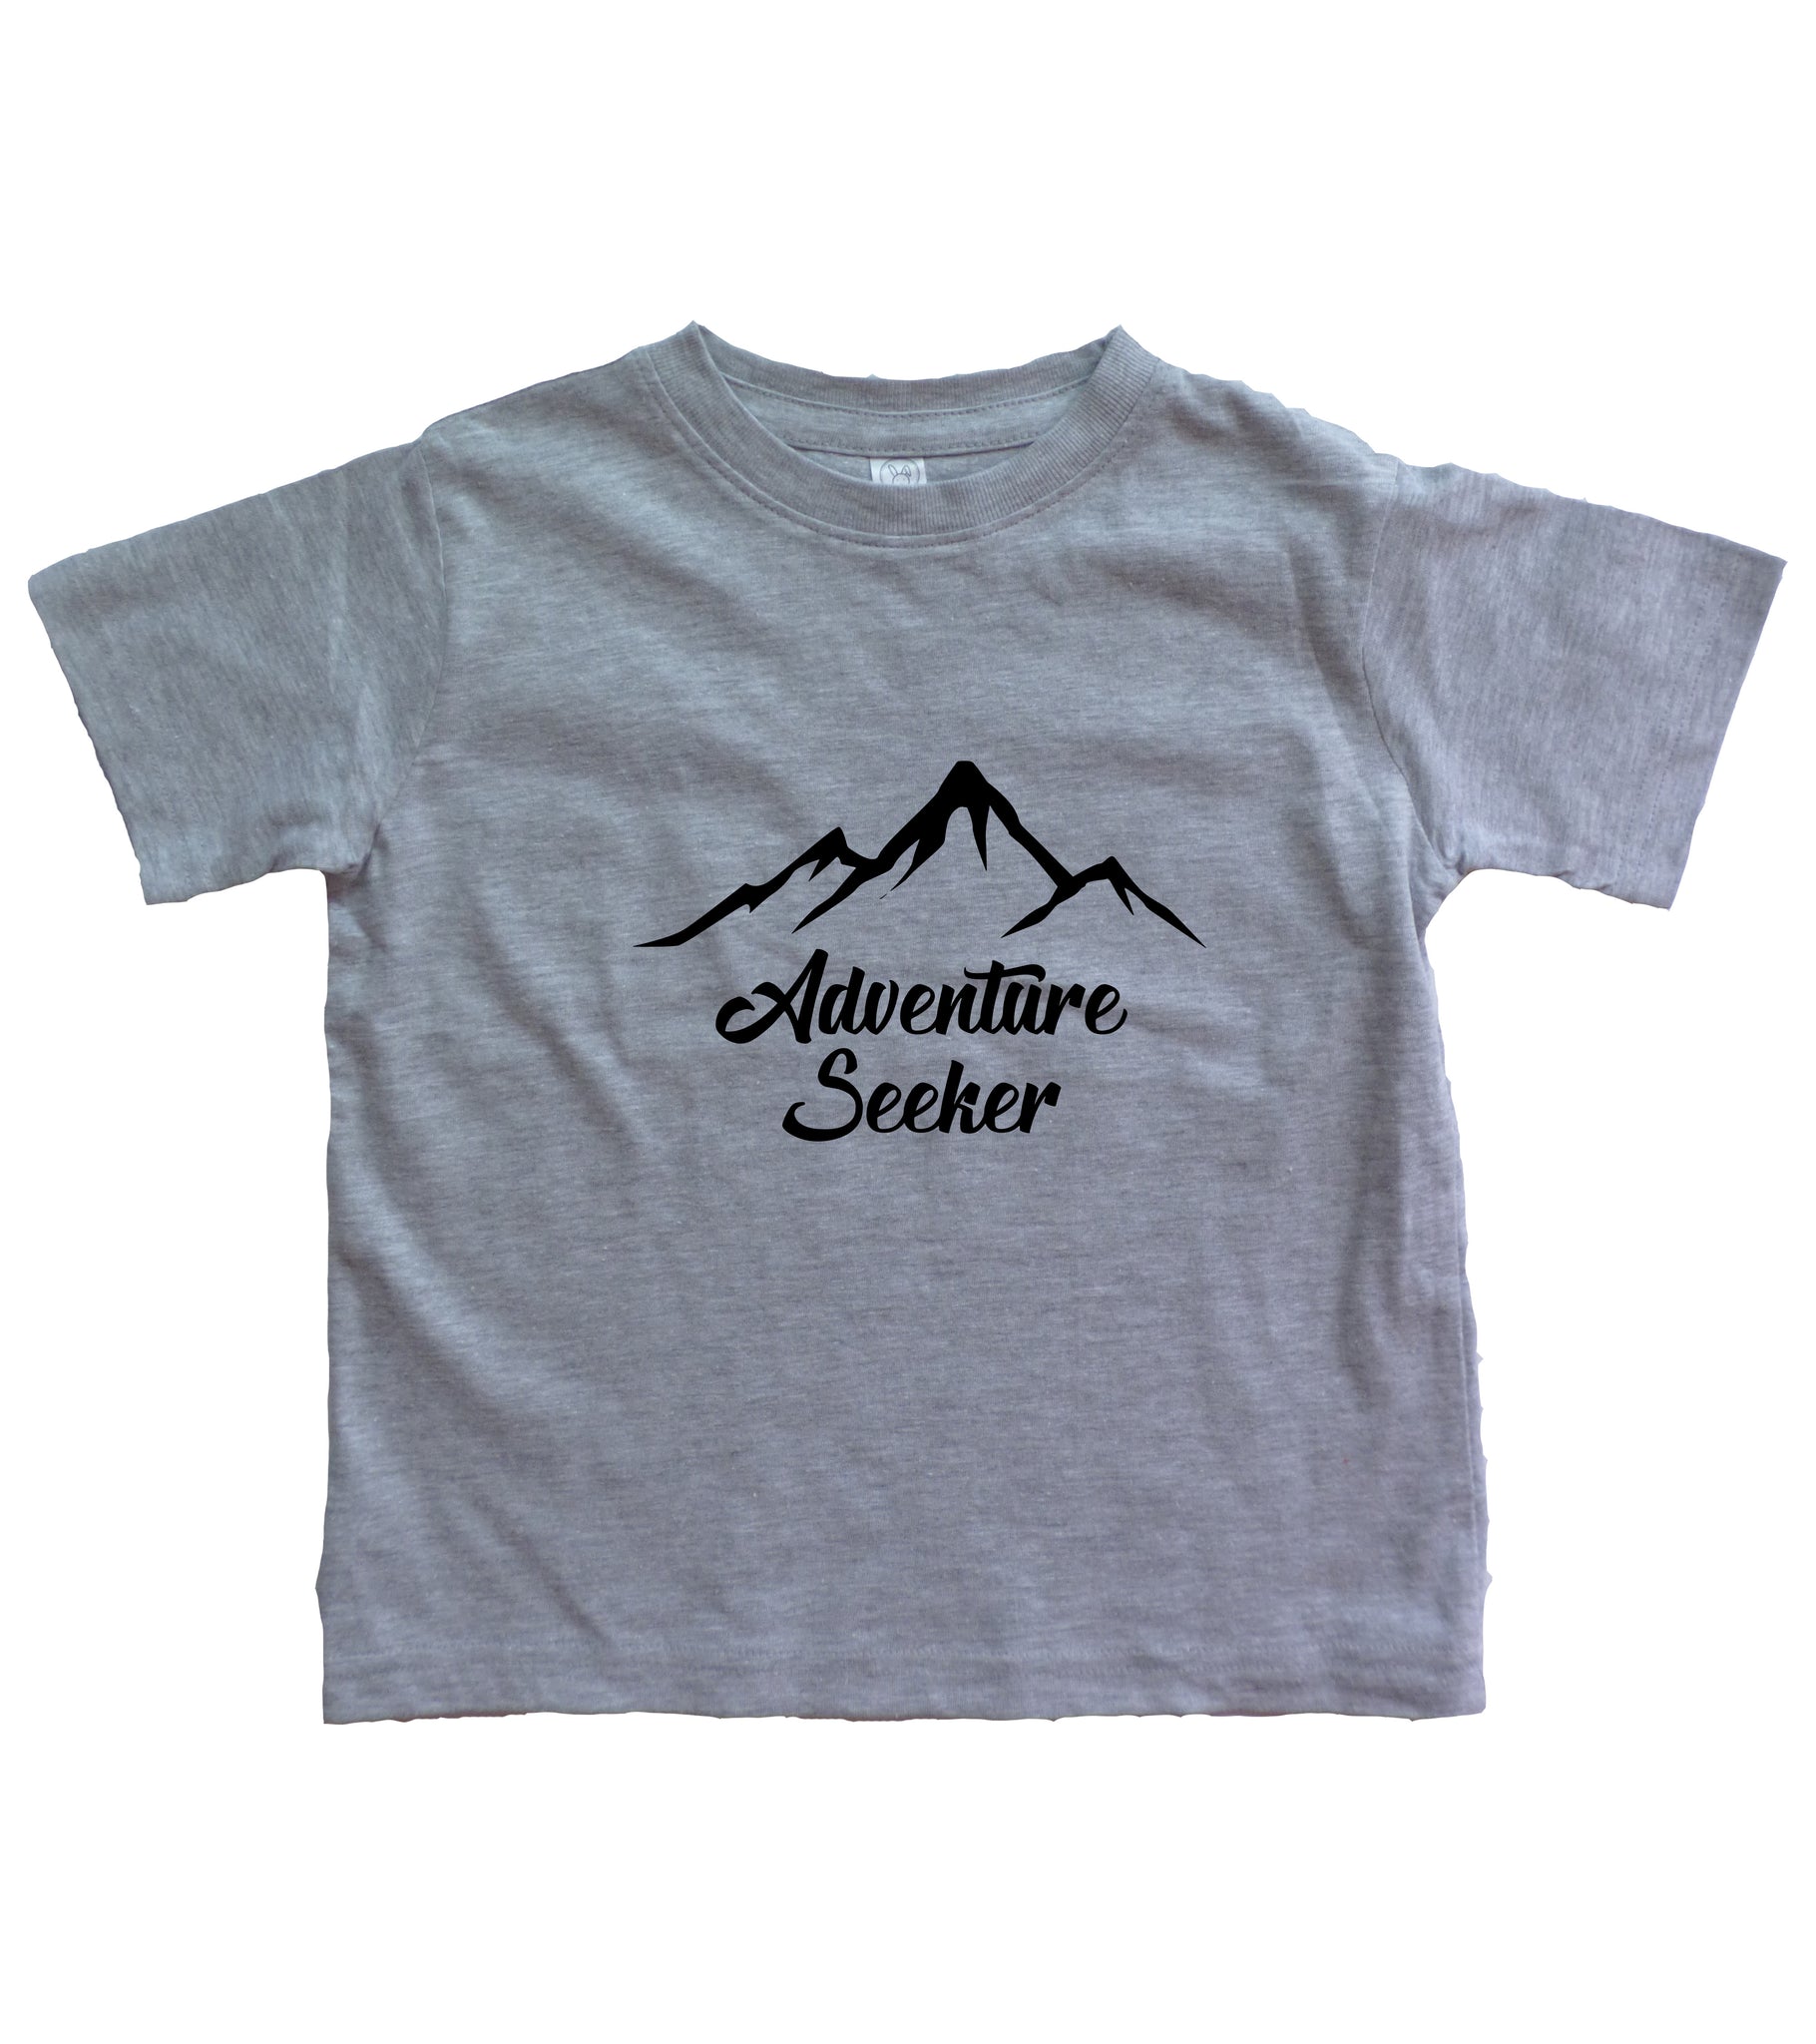 Adventure Seeker Toddler Shirt Wholesale